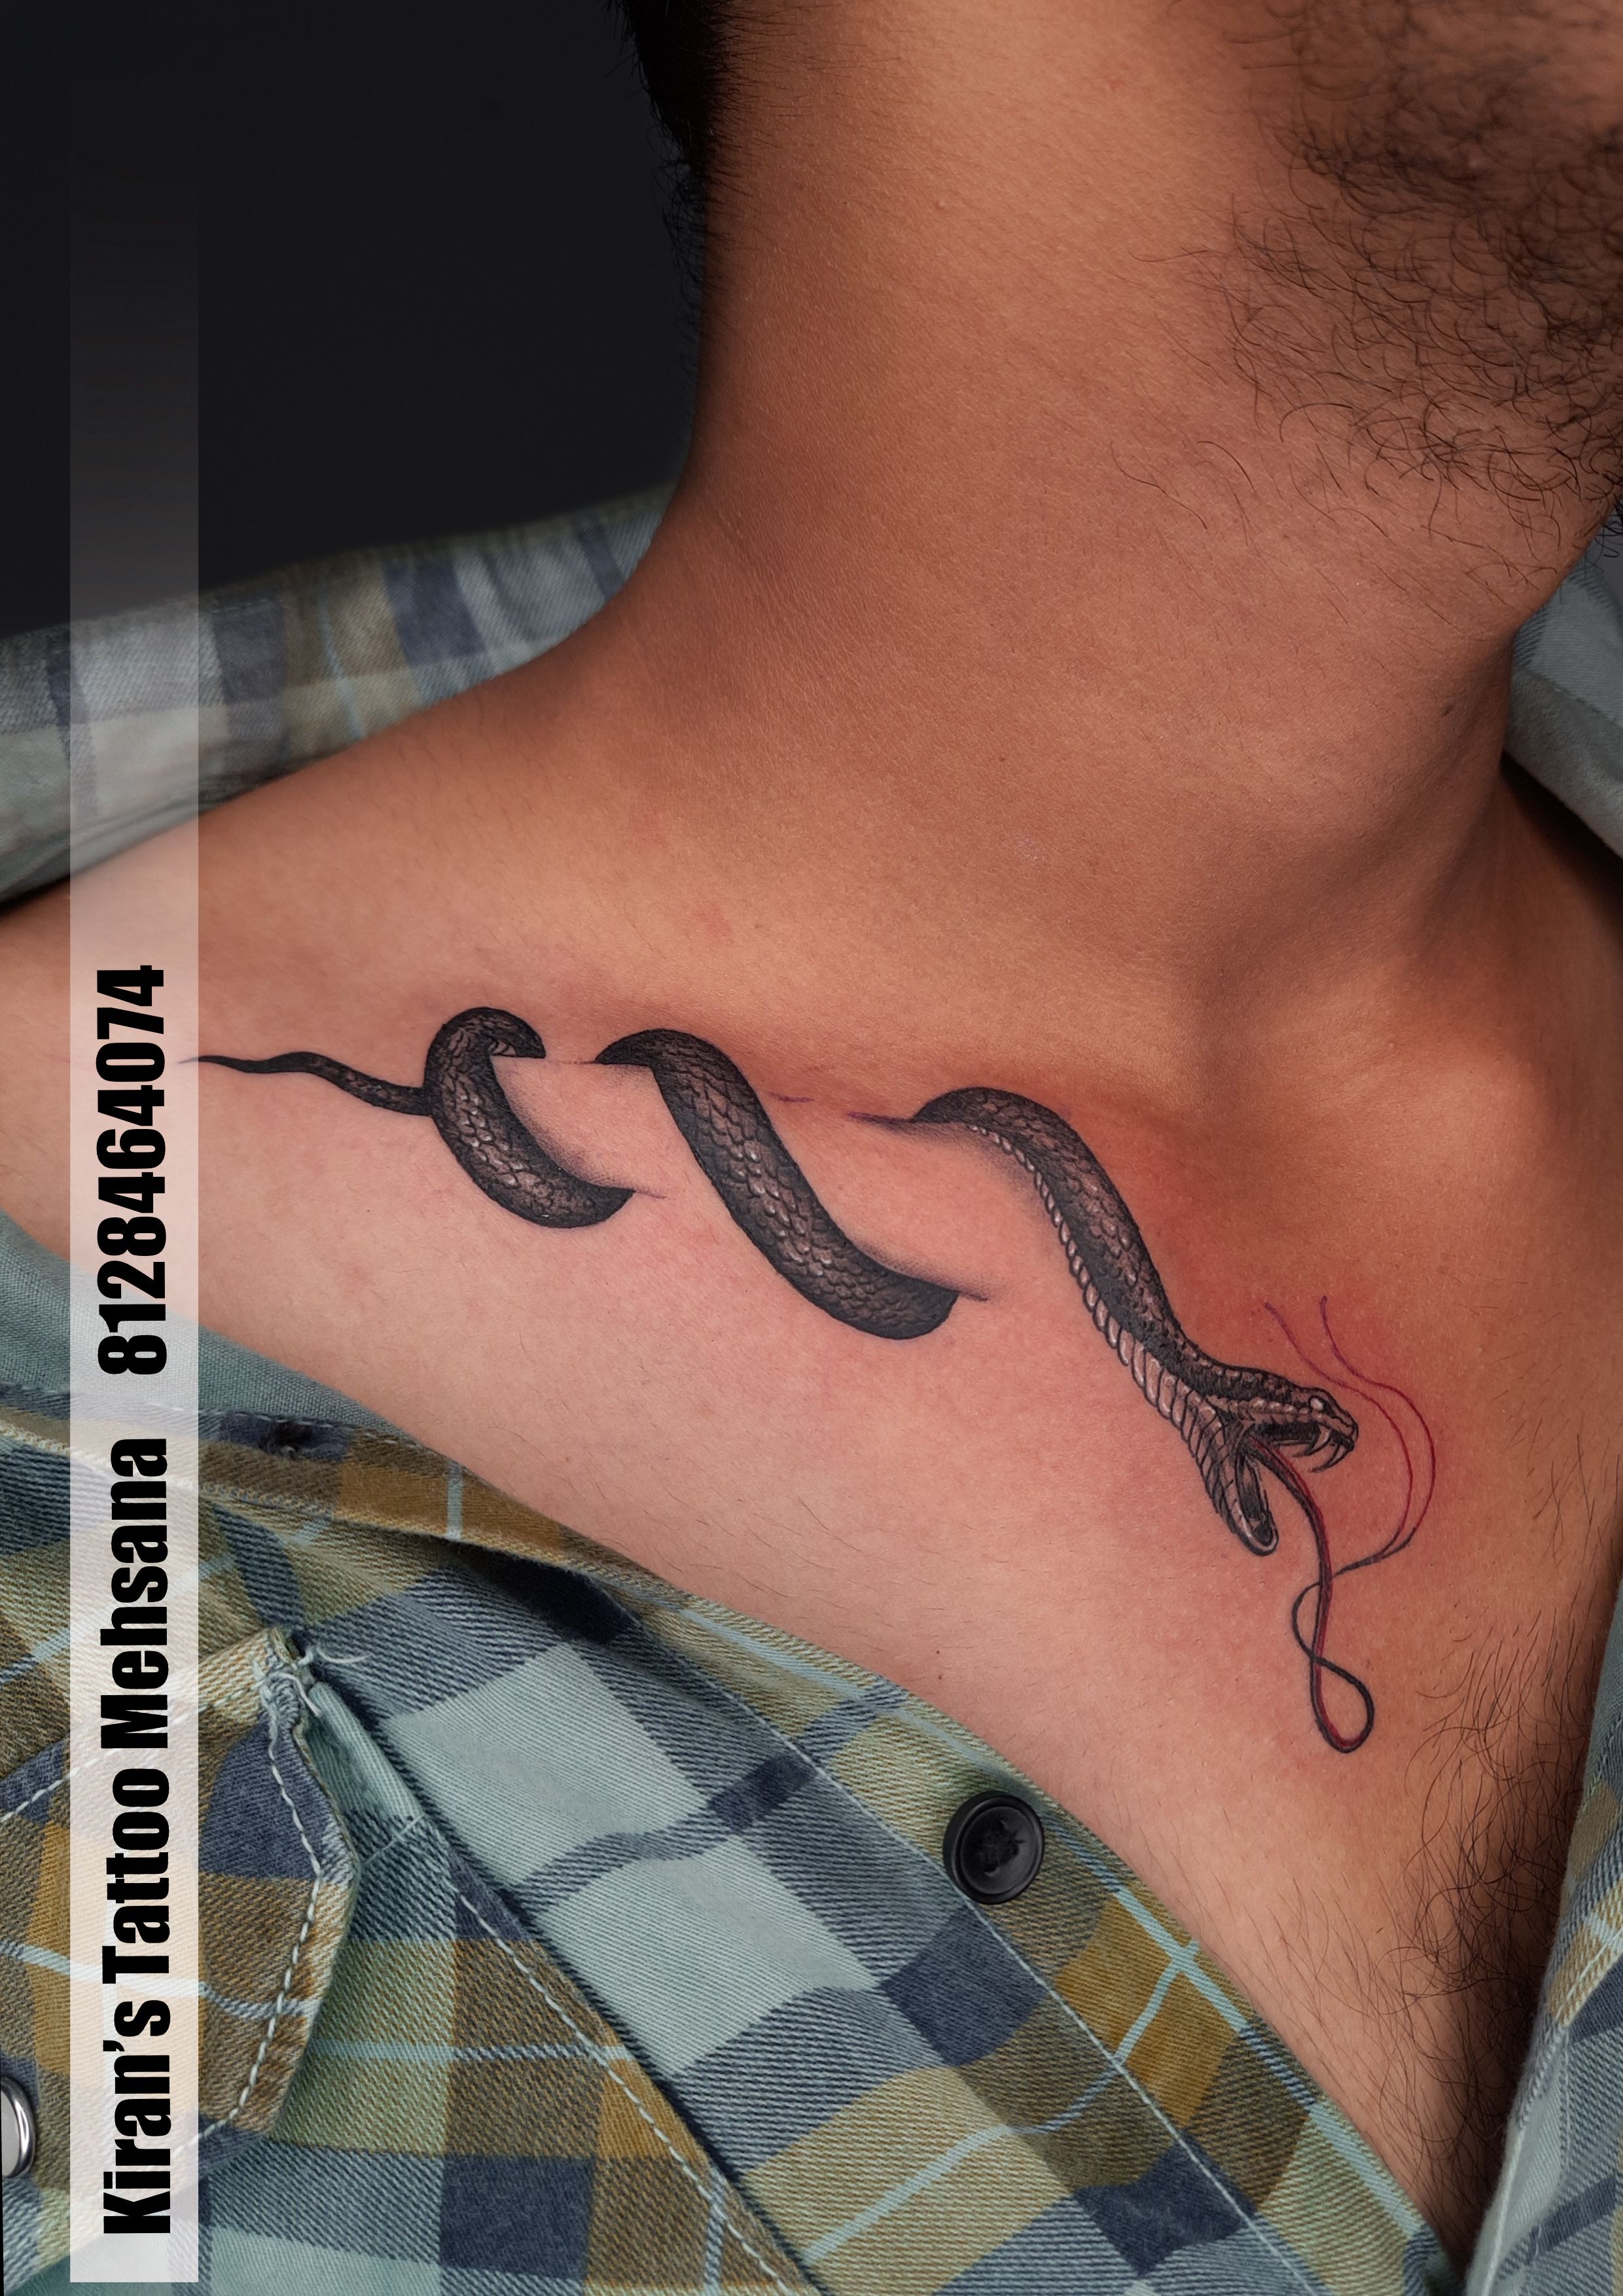 tattoo, snake and chest - image #7083303 on Favim.com